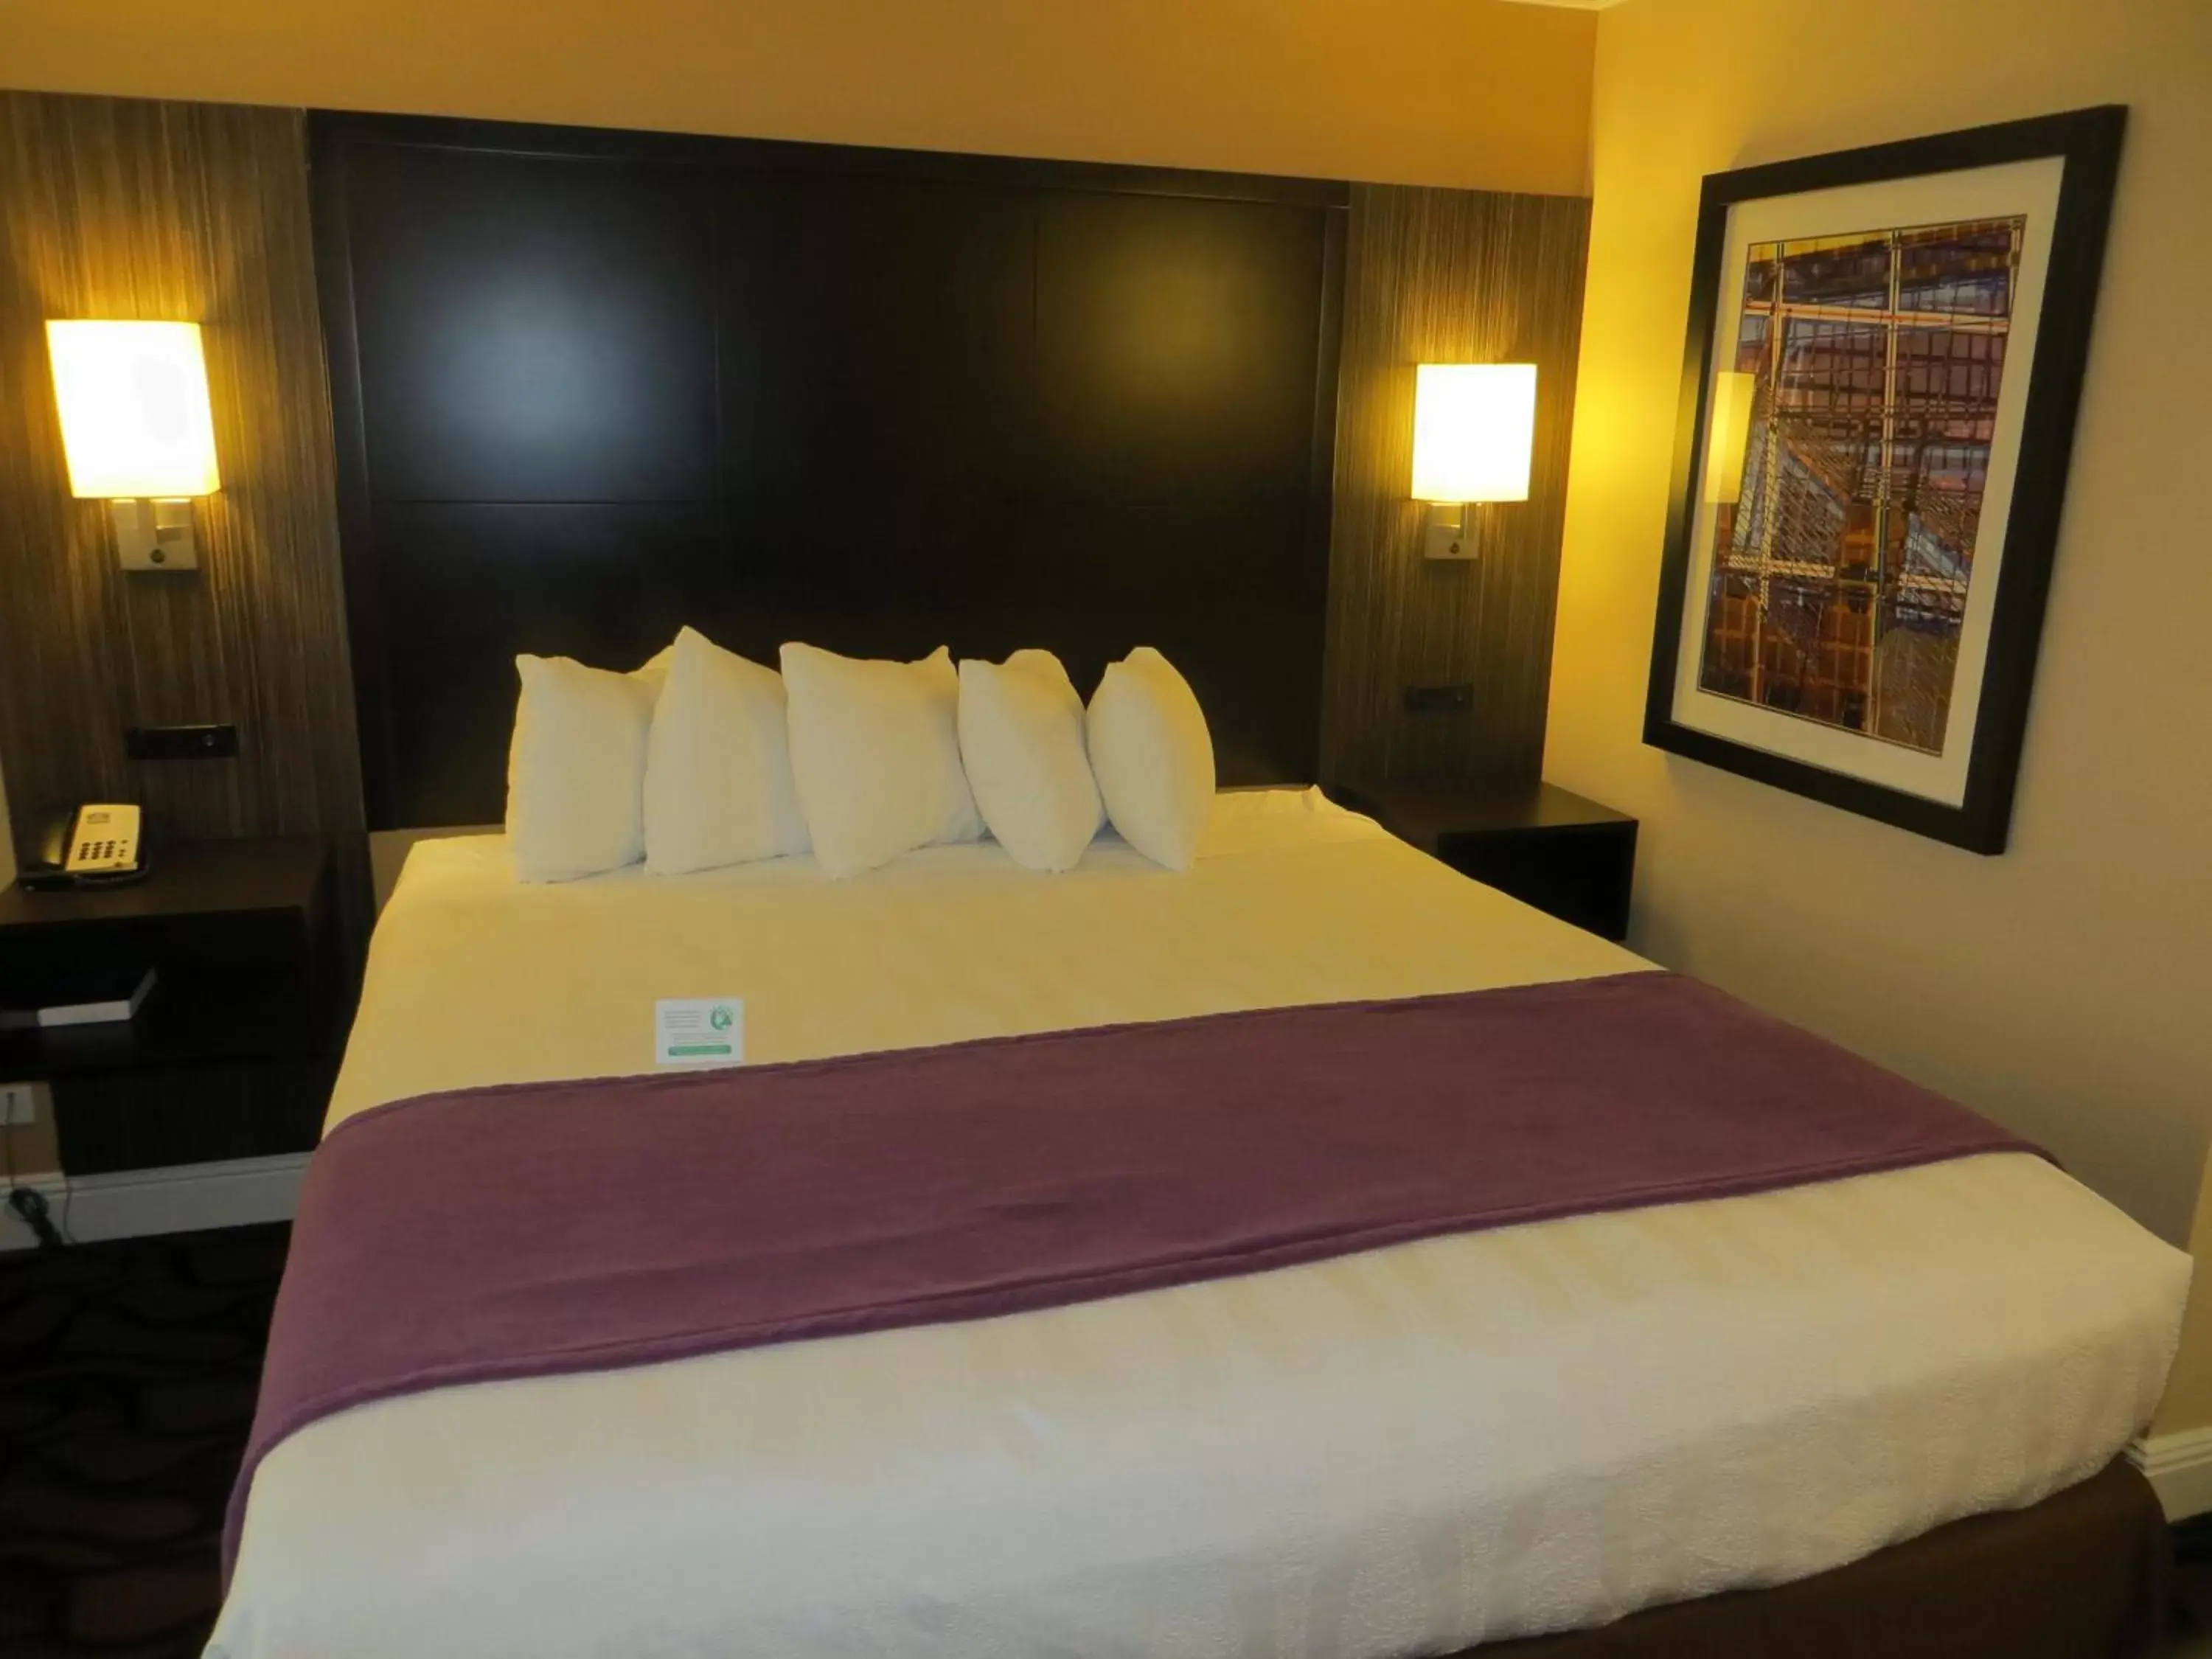 Bedroom, Bed in Best Western Plus Airport Plaza